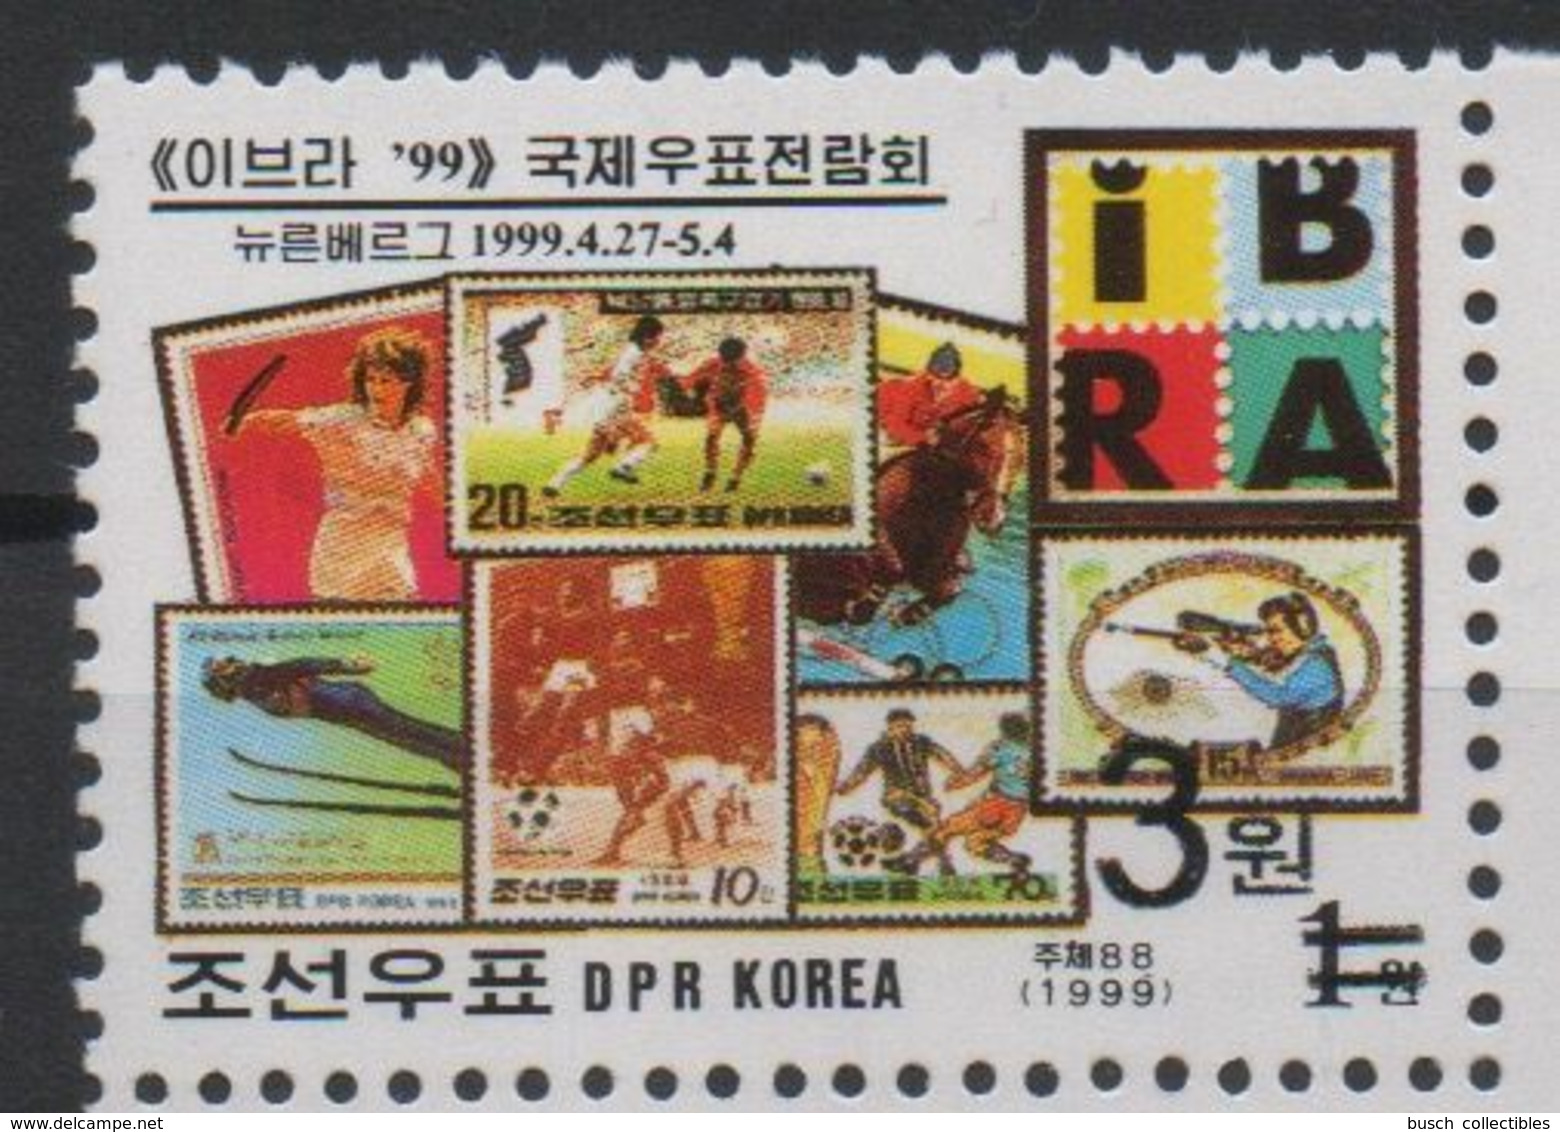 North Korea Corée Du Nord 2006 Mi. 5068 Surchargé OVERPRINT IBRA Nürnberg 1999 Stamp On Stamp Timbre Sur Timbre - Timbres Sur Timbres